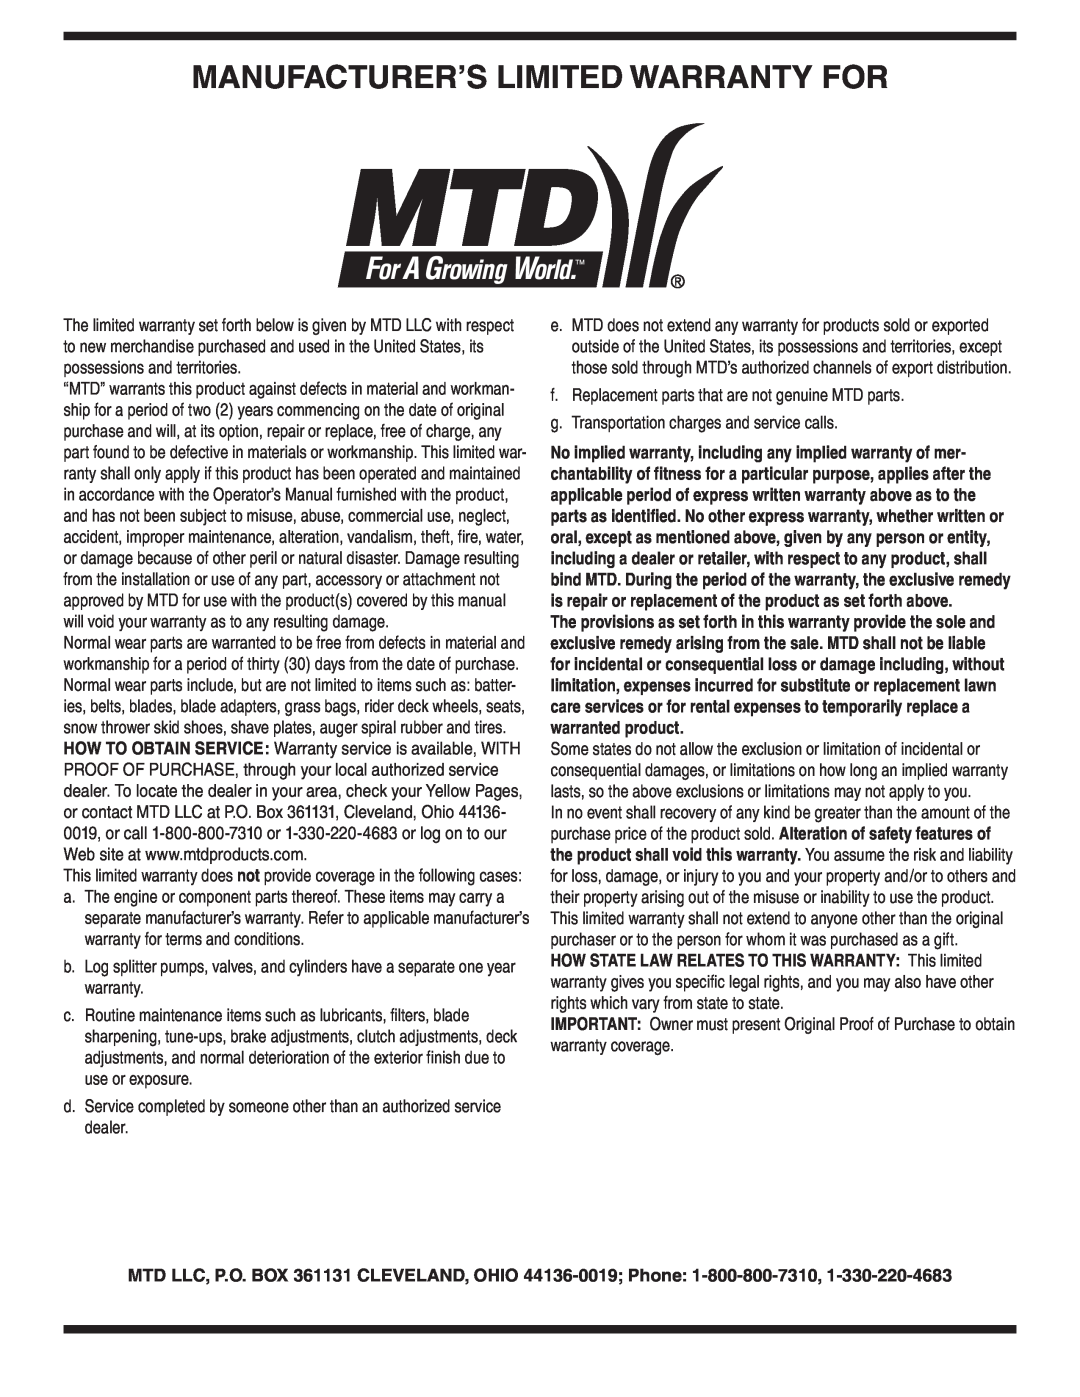 MTD Series 580 warranty Manufacturer’S Limited Warranty For 